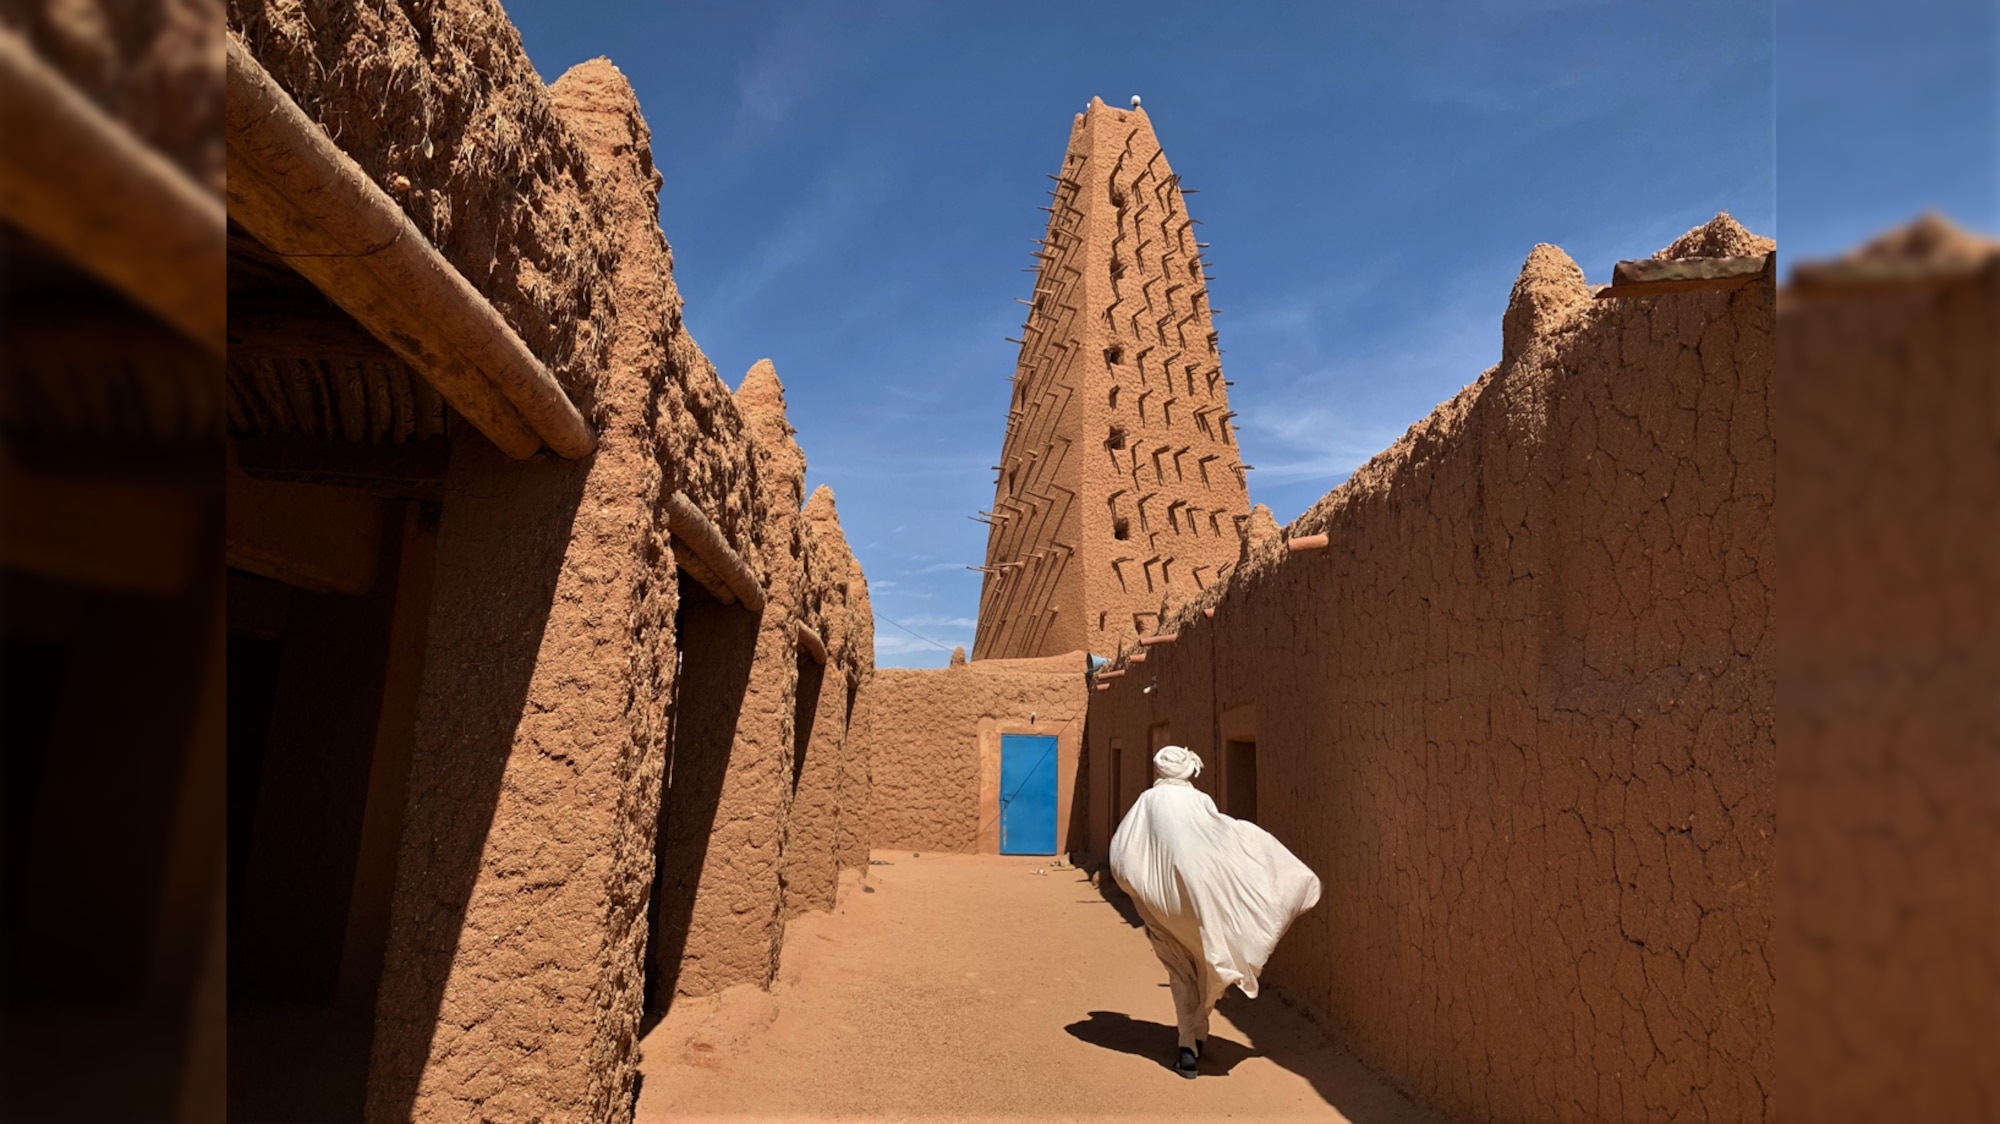 A mosque in Niger. Photo by AFCLC’s Dr. Scott Edmondson